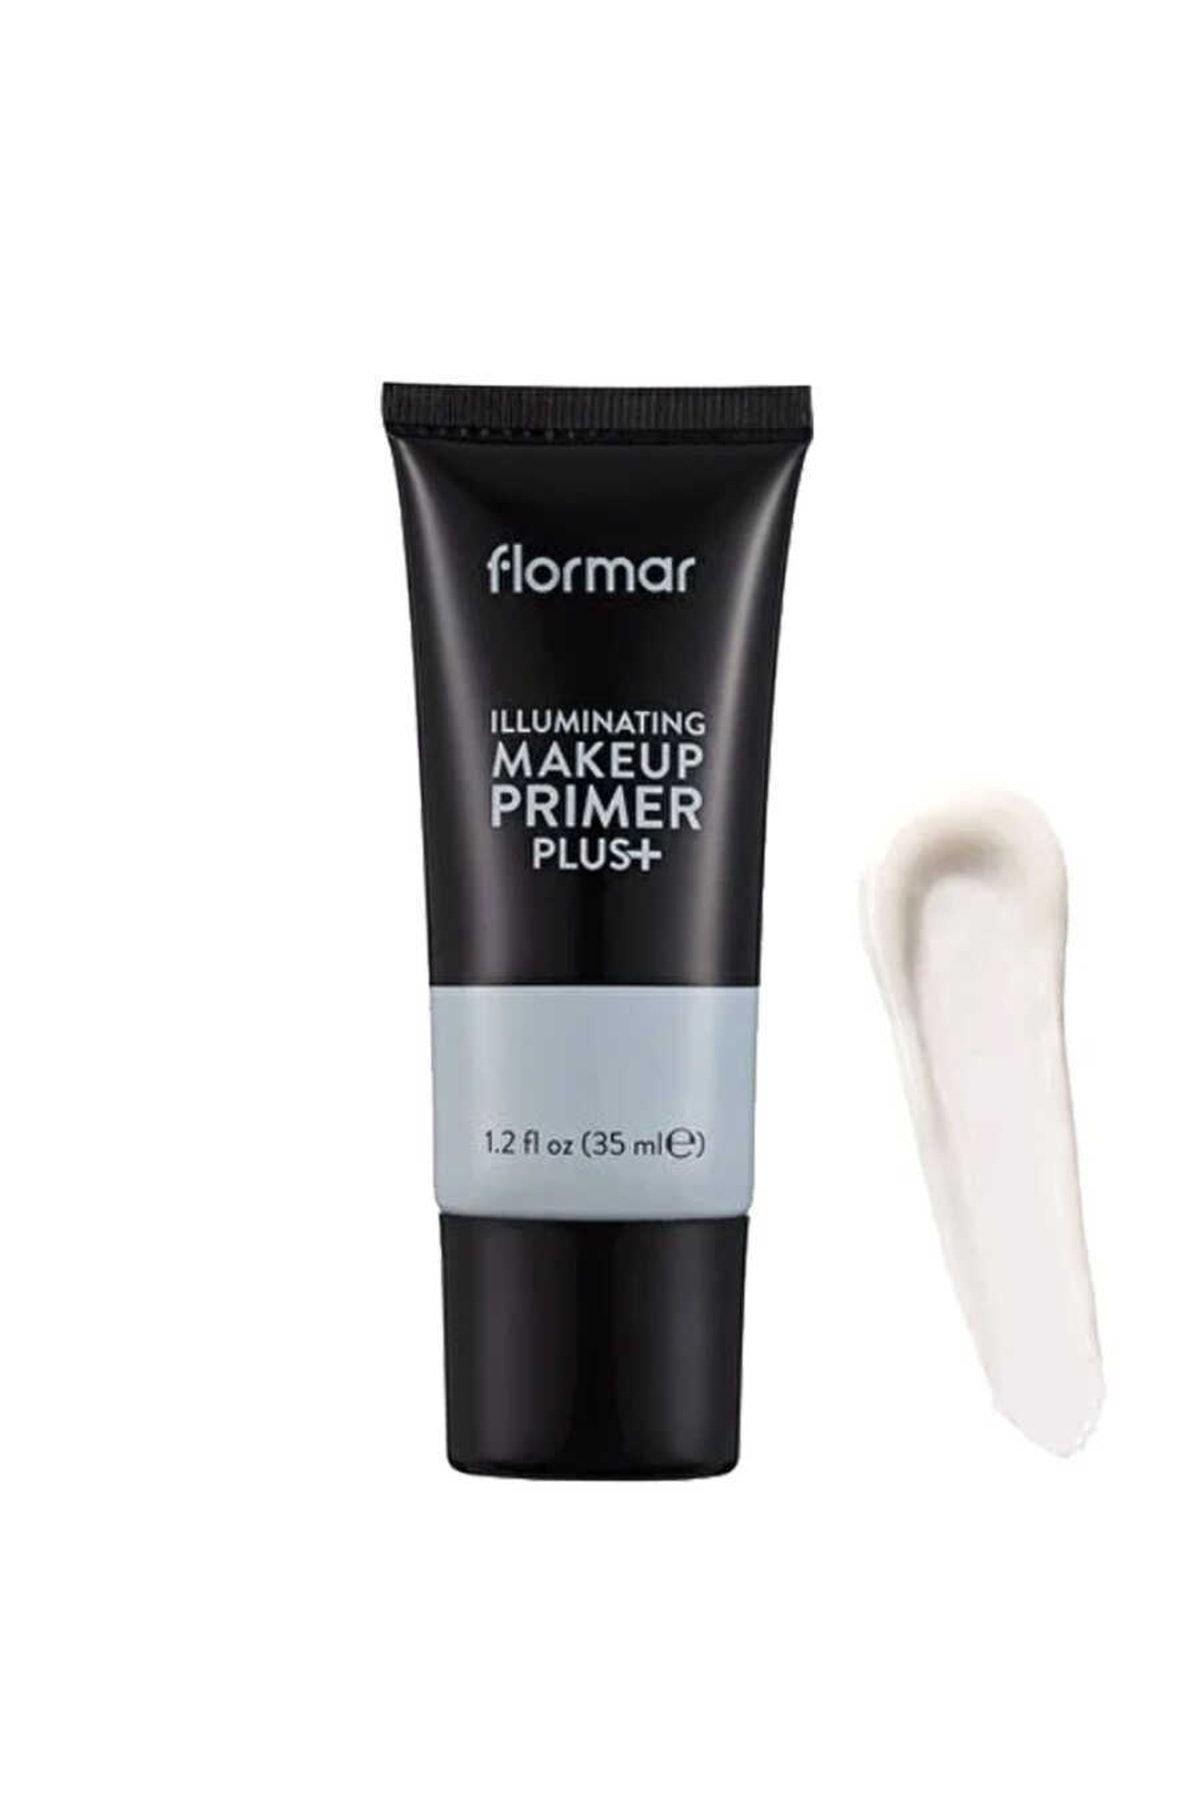 Flormar Illuminating Make Up Primer Plus 35ml